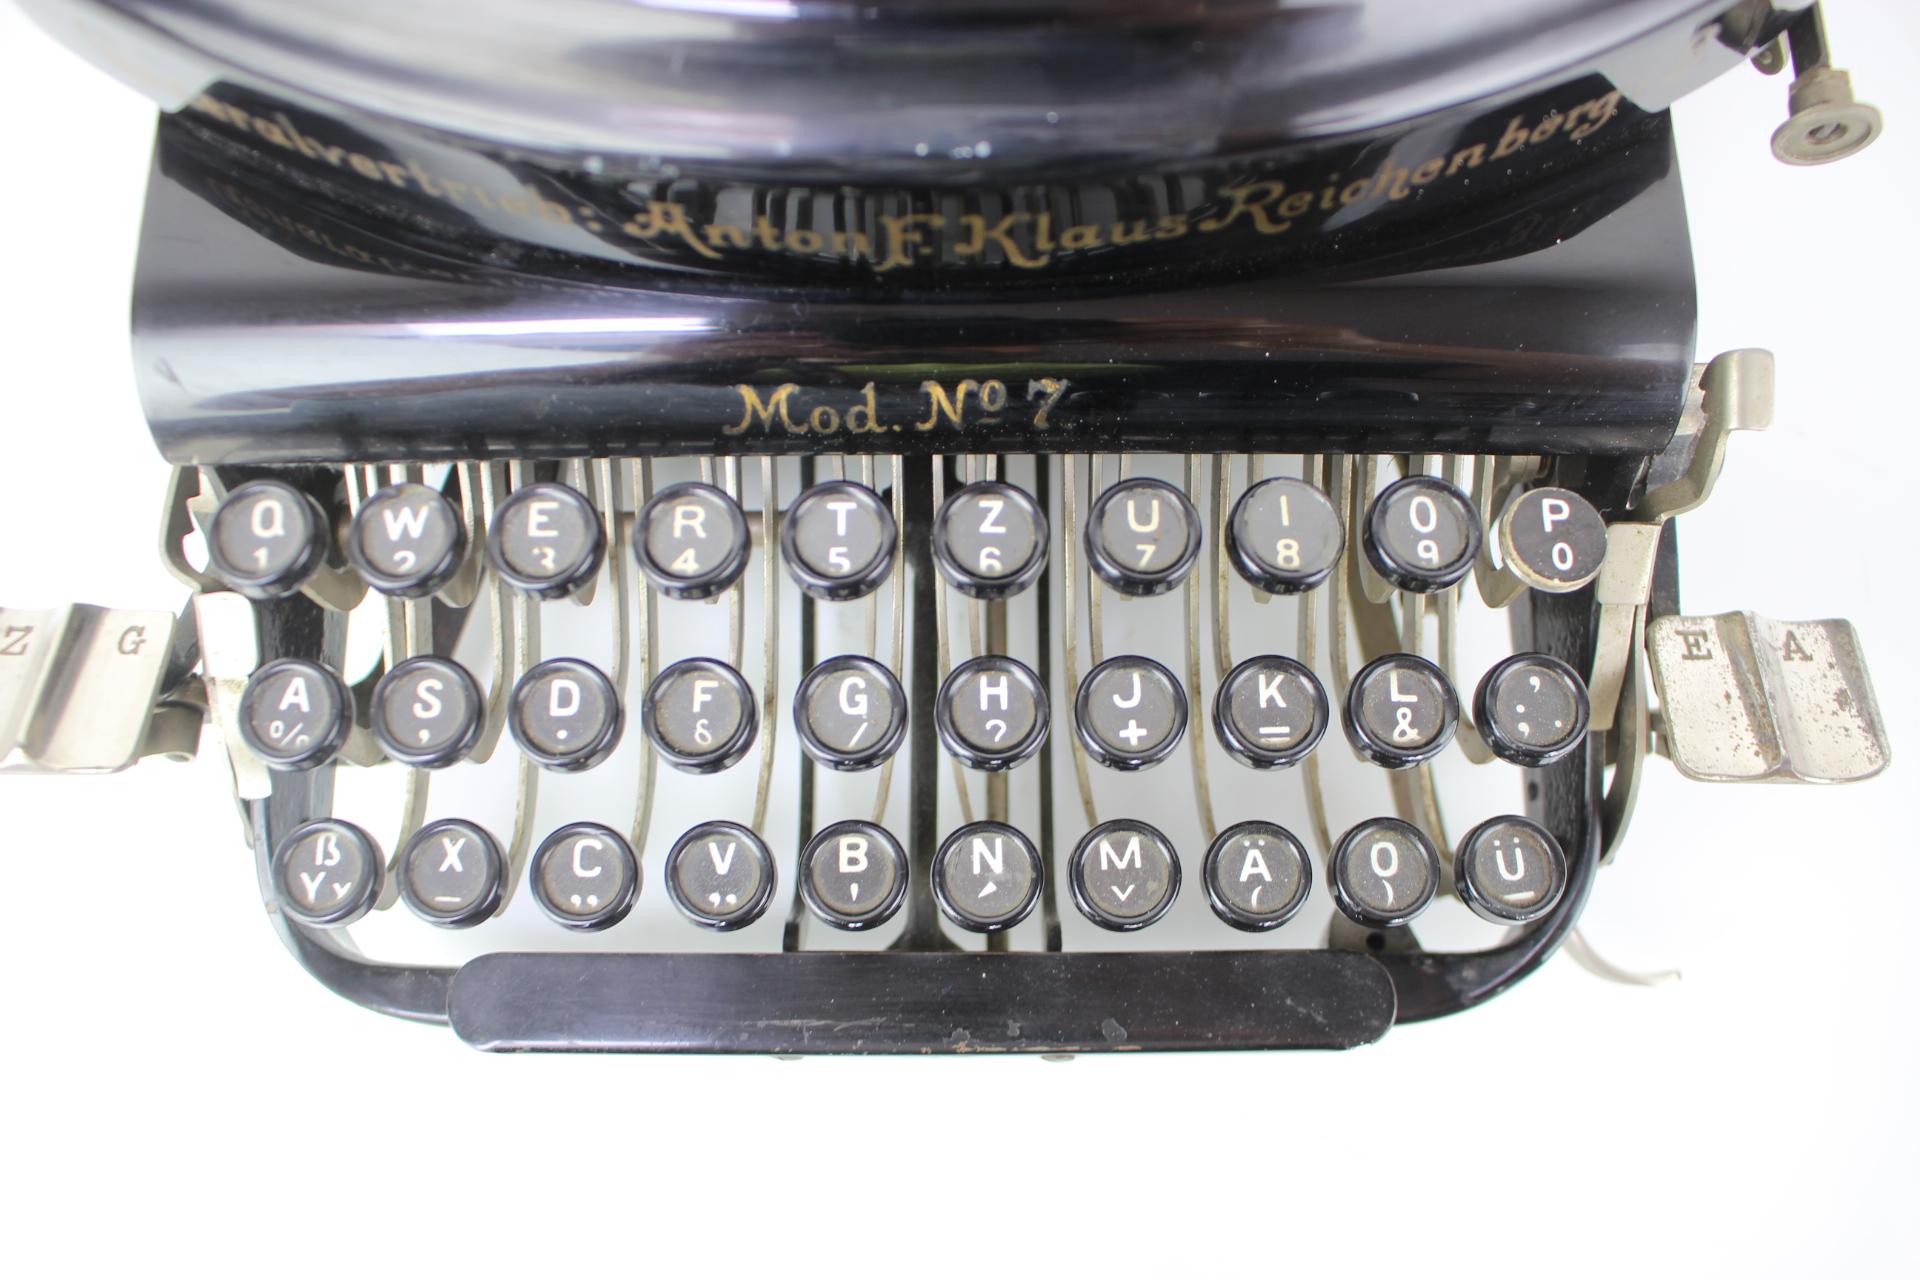  Rare Typewriter ADLER No7, Germany 1900s For Sale 2